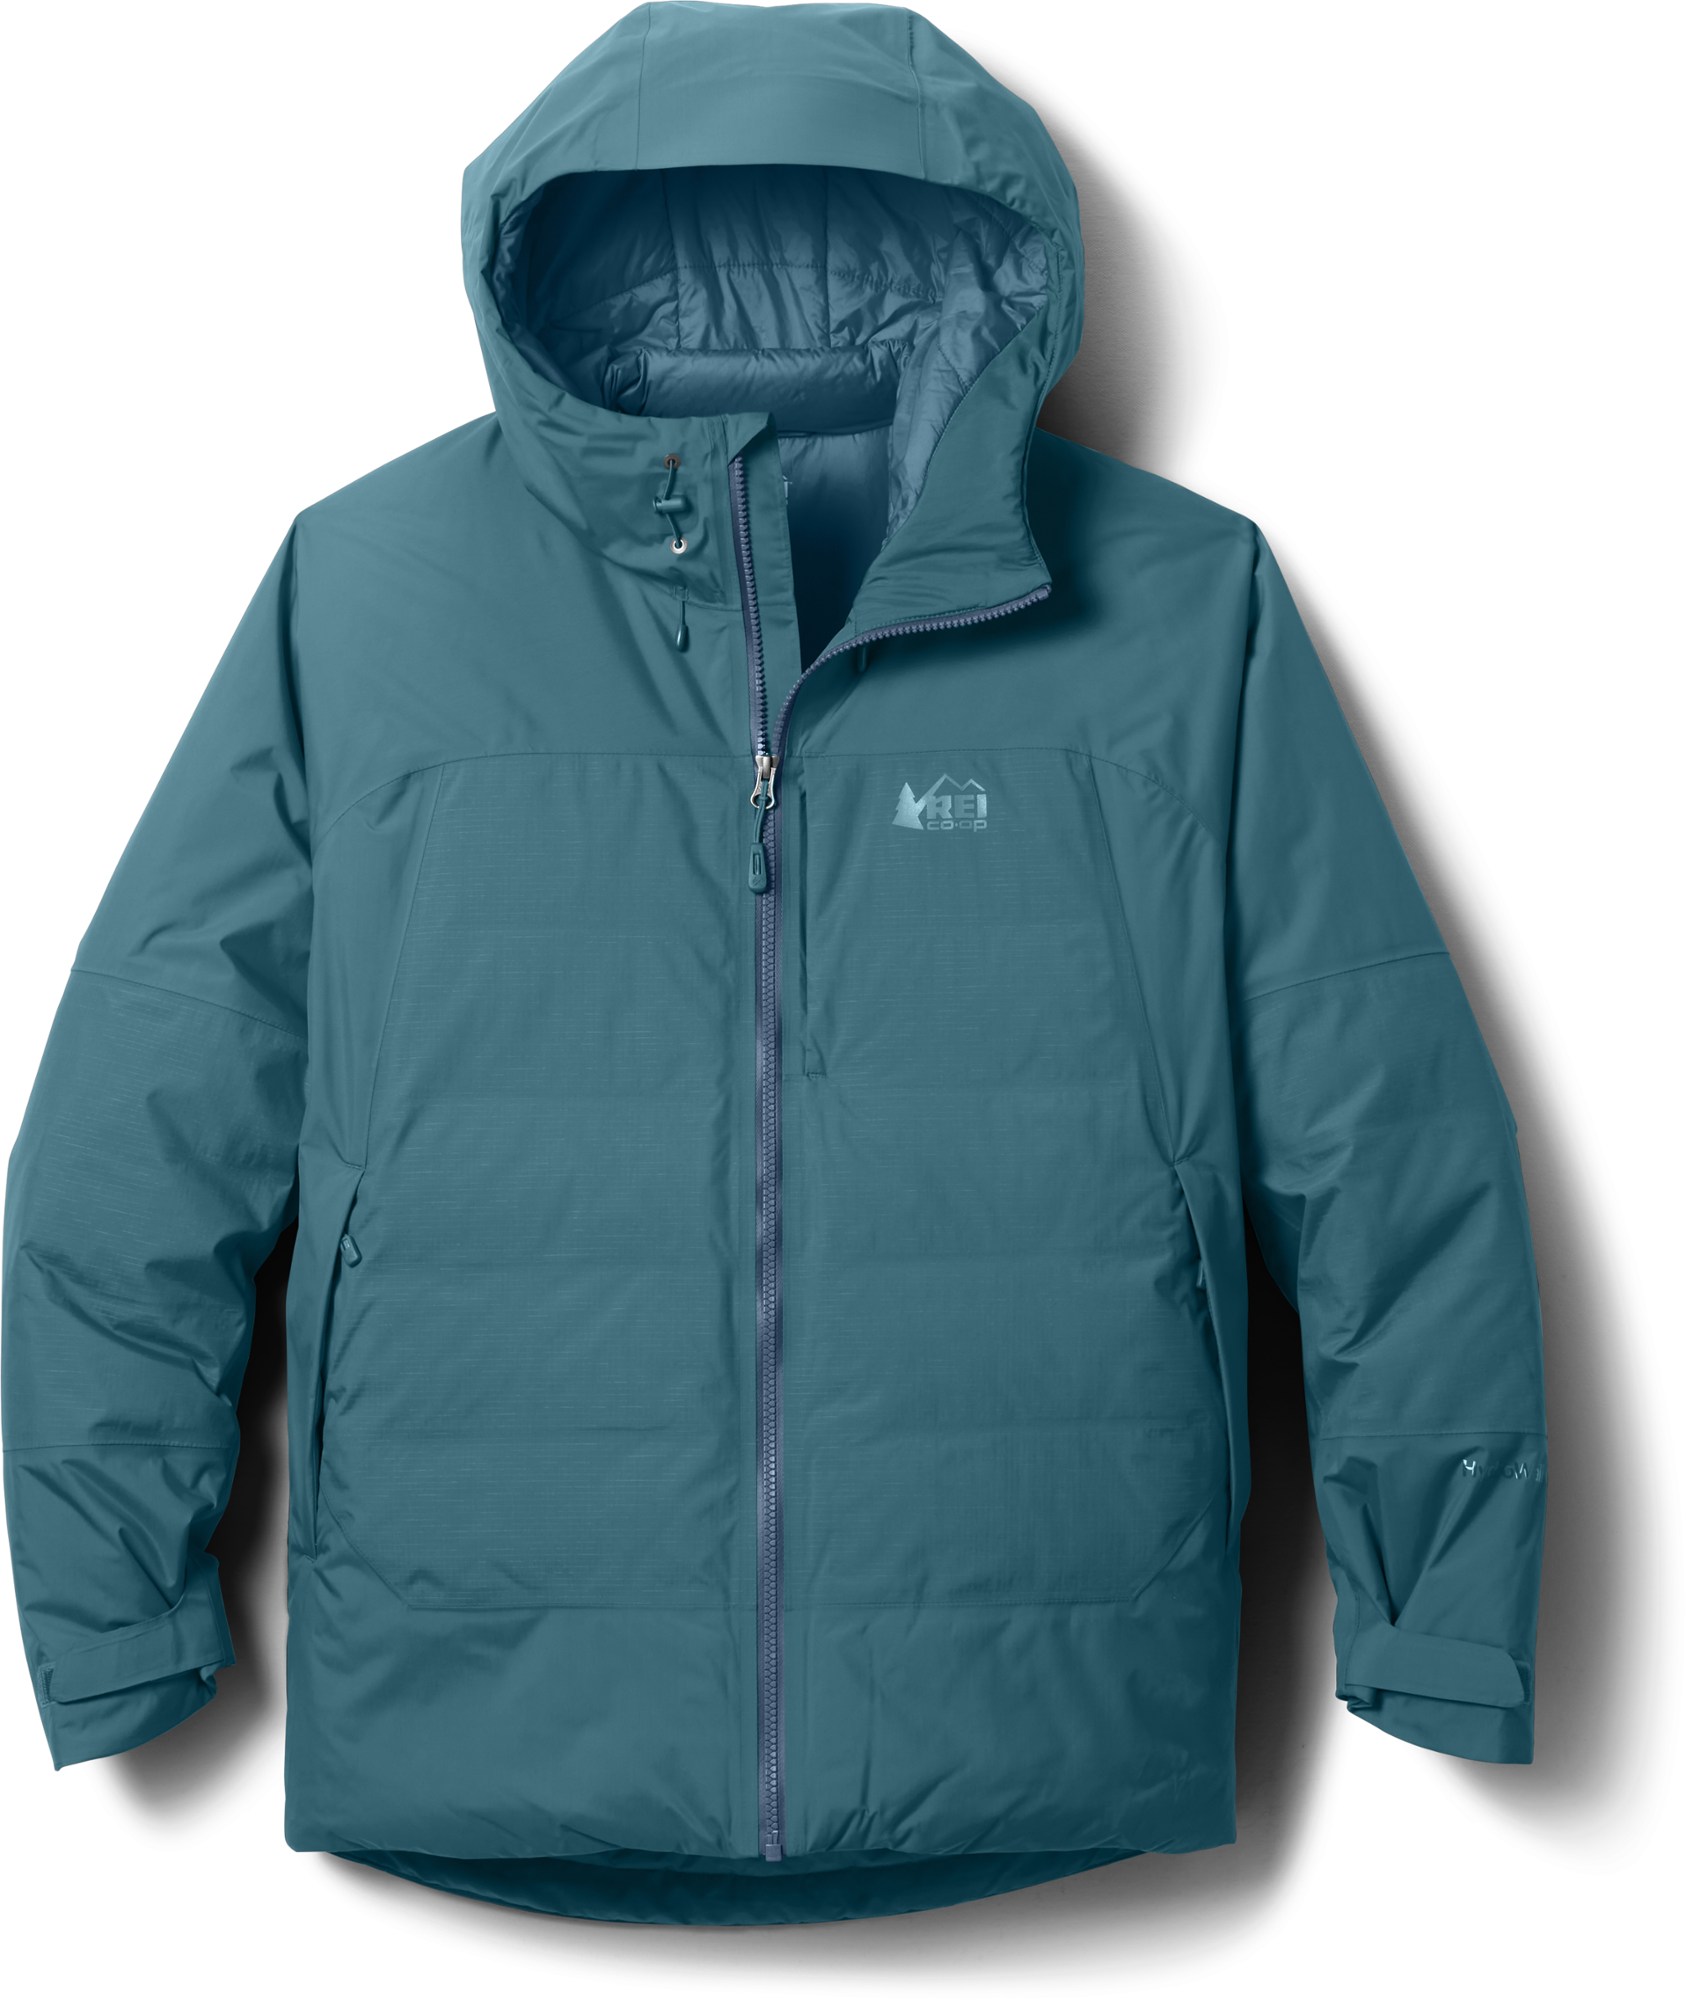 REI Co-op Stormhenge Down Hybrid winter jacket